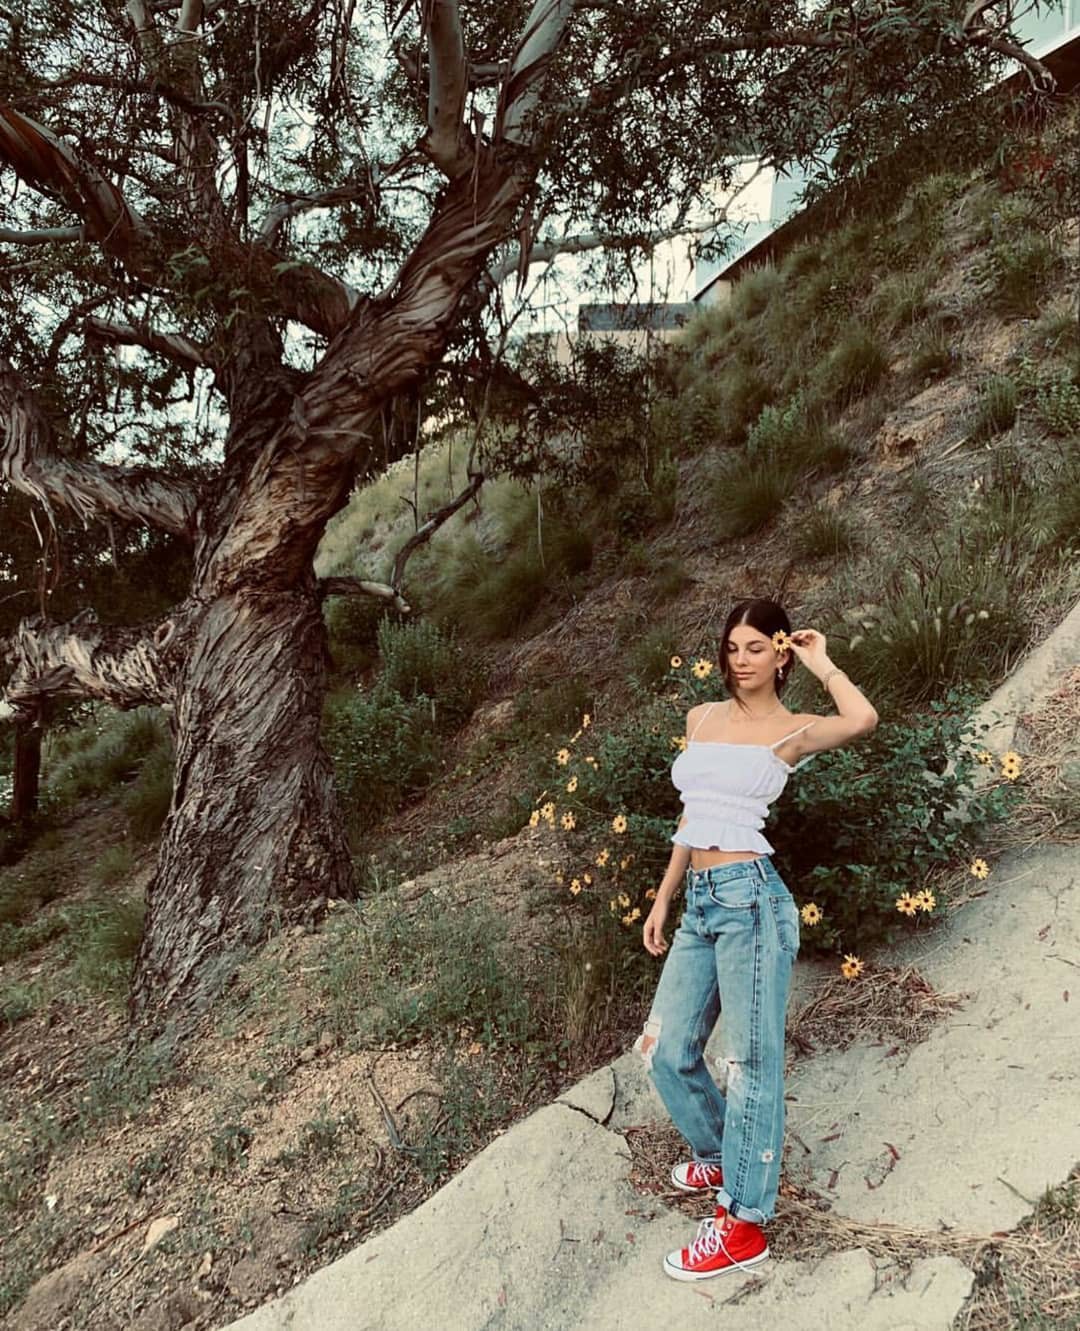 Latest Style Camila Morrone Snaps Instagram: Instagram photos,  Hot Girls Instagram,  instagram models,  Hot Instagram Models,  Camila Morrone,  Hot Camila Morrone  